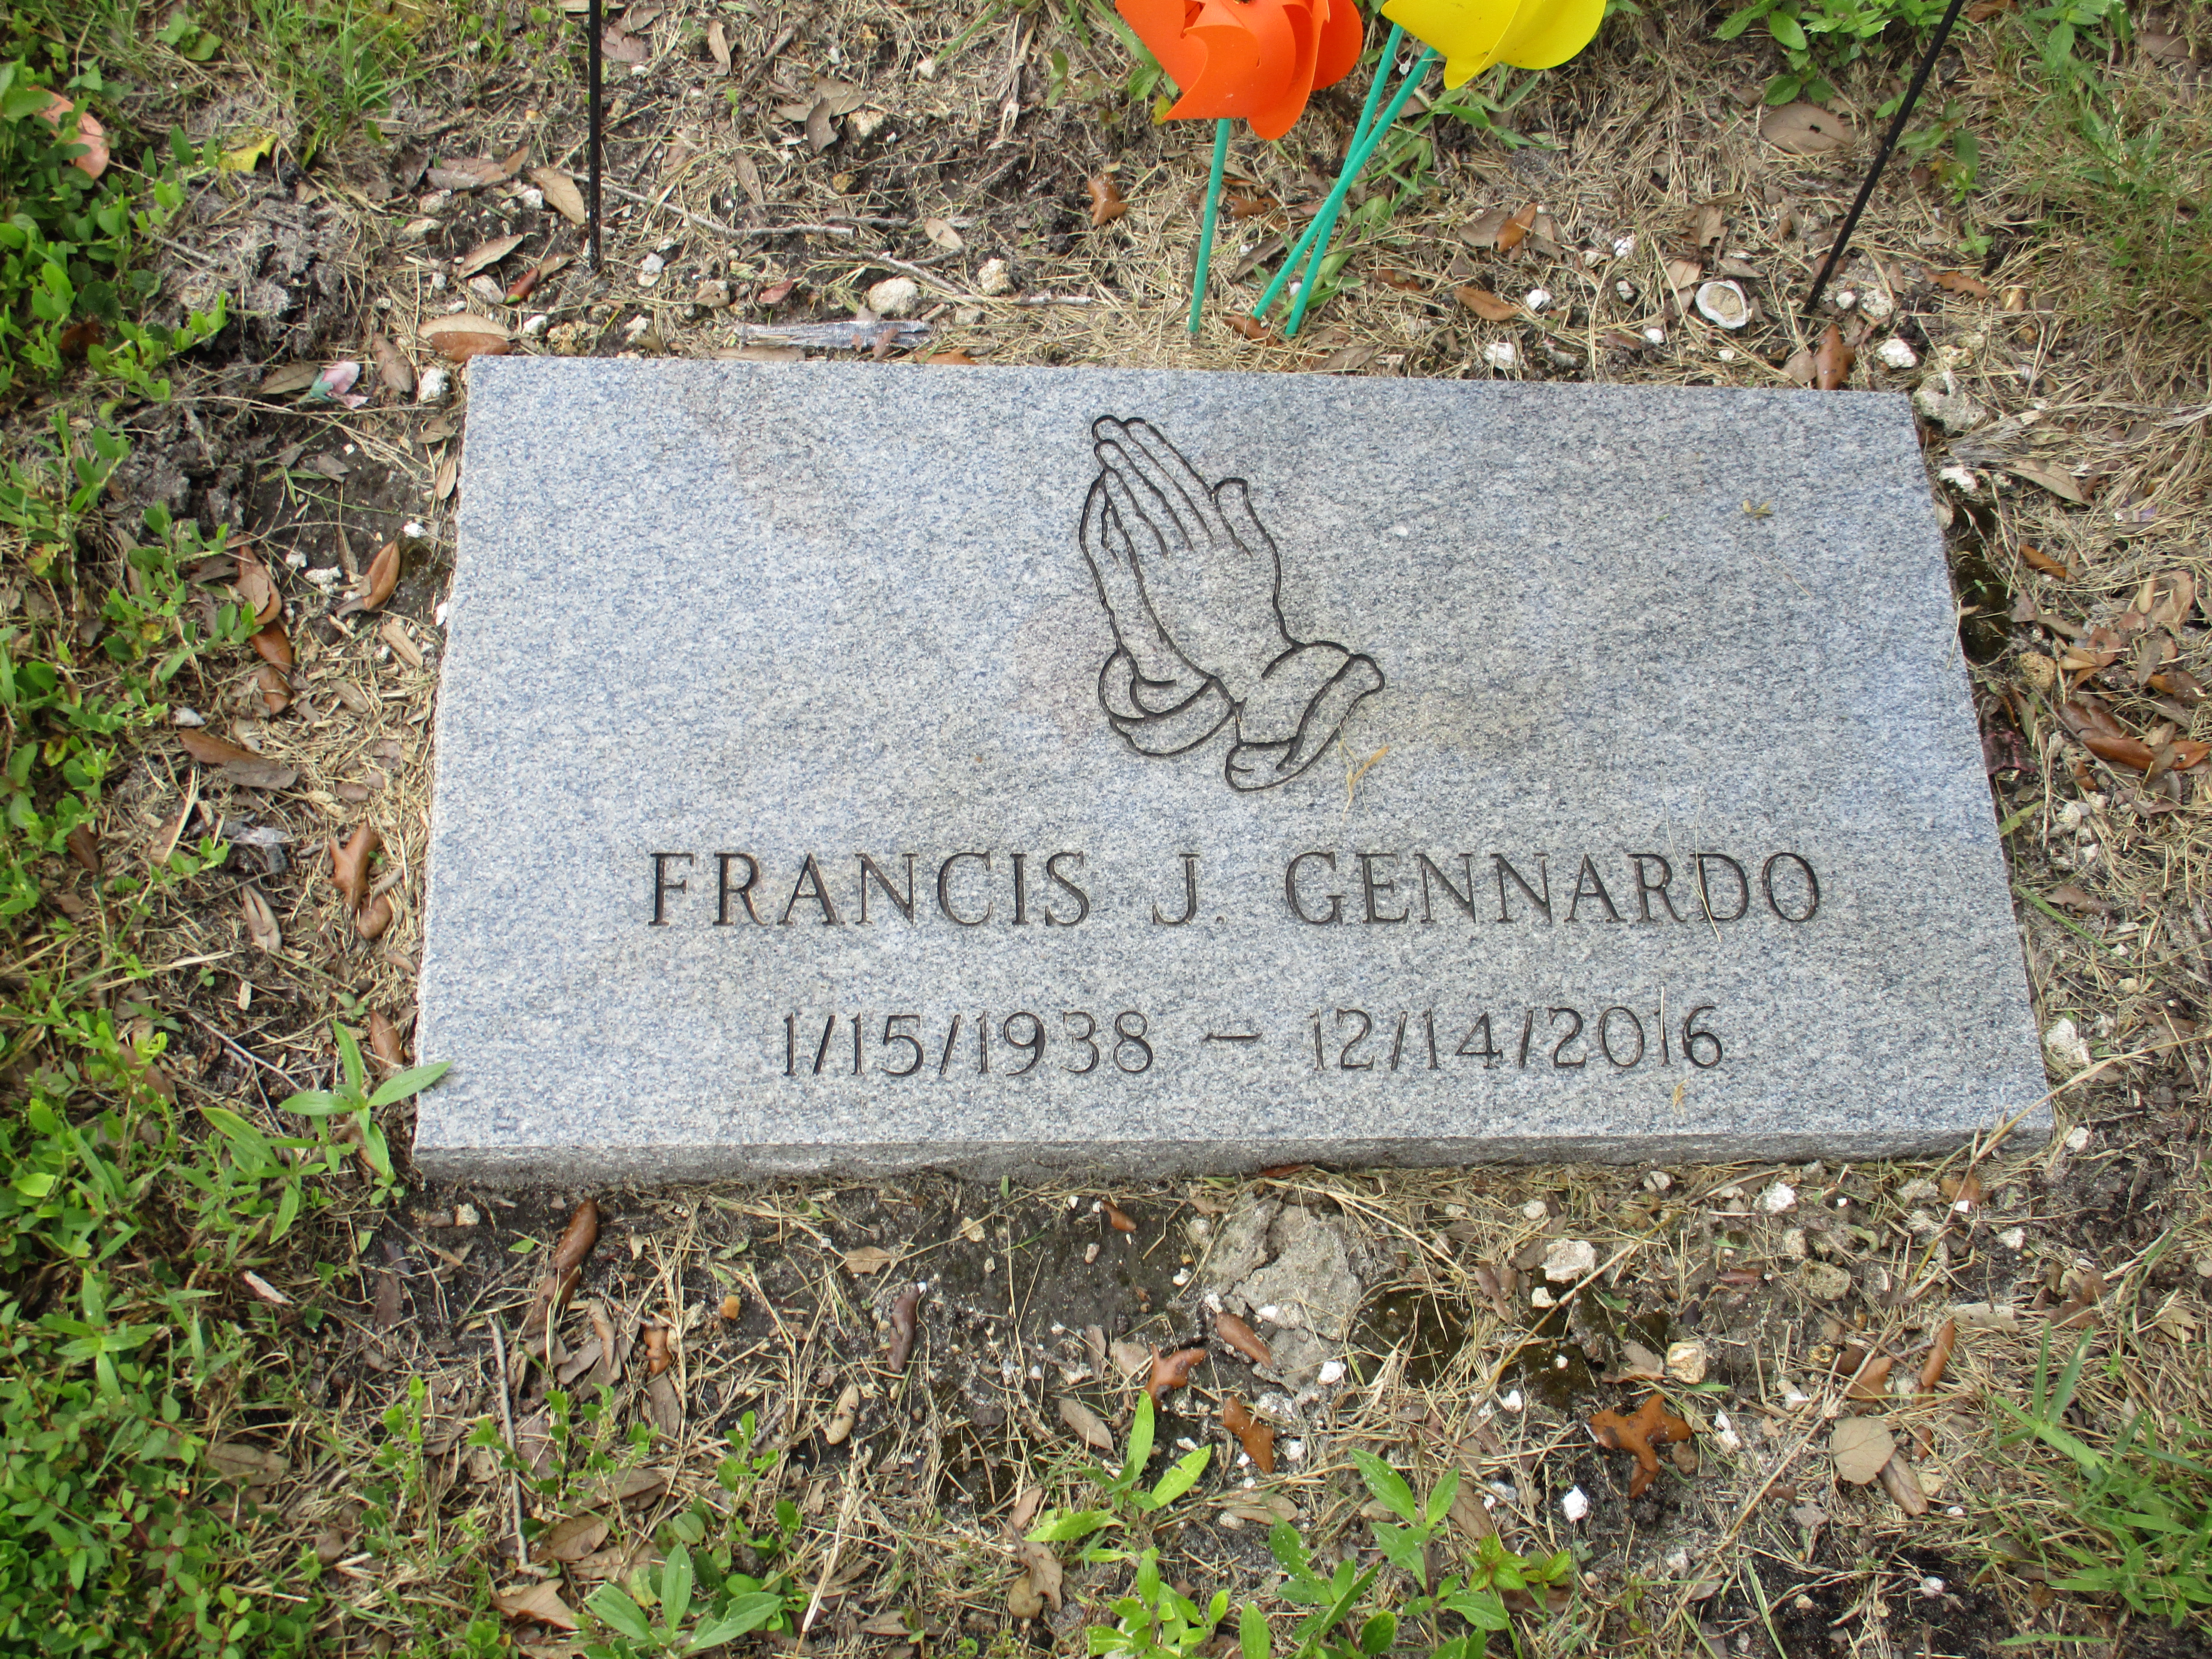 Francis J Gennardo